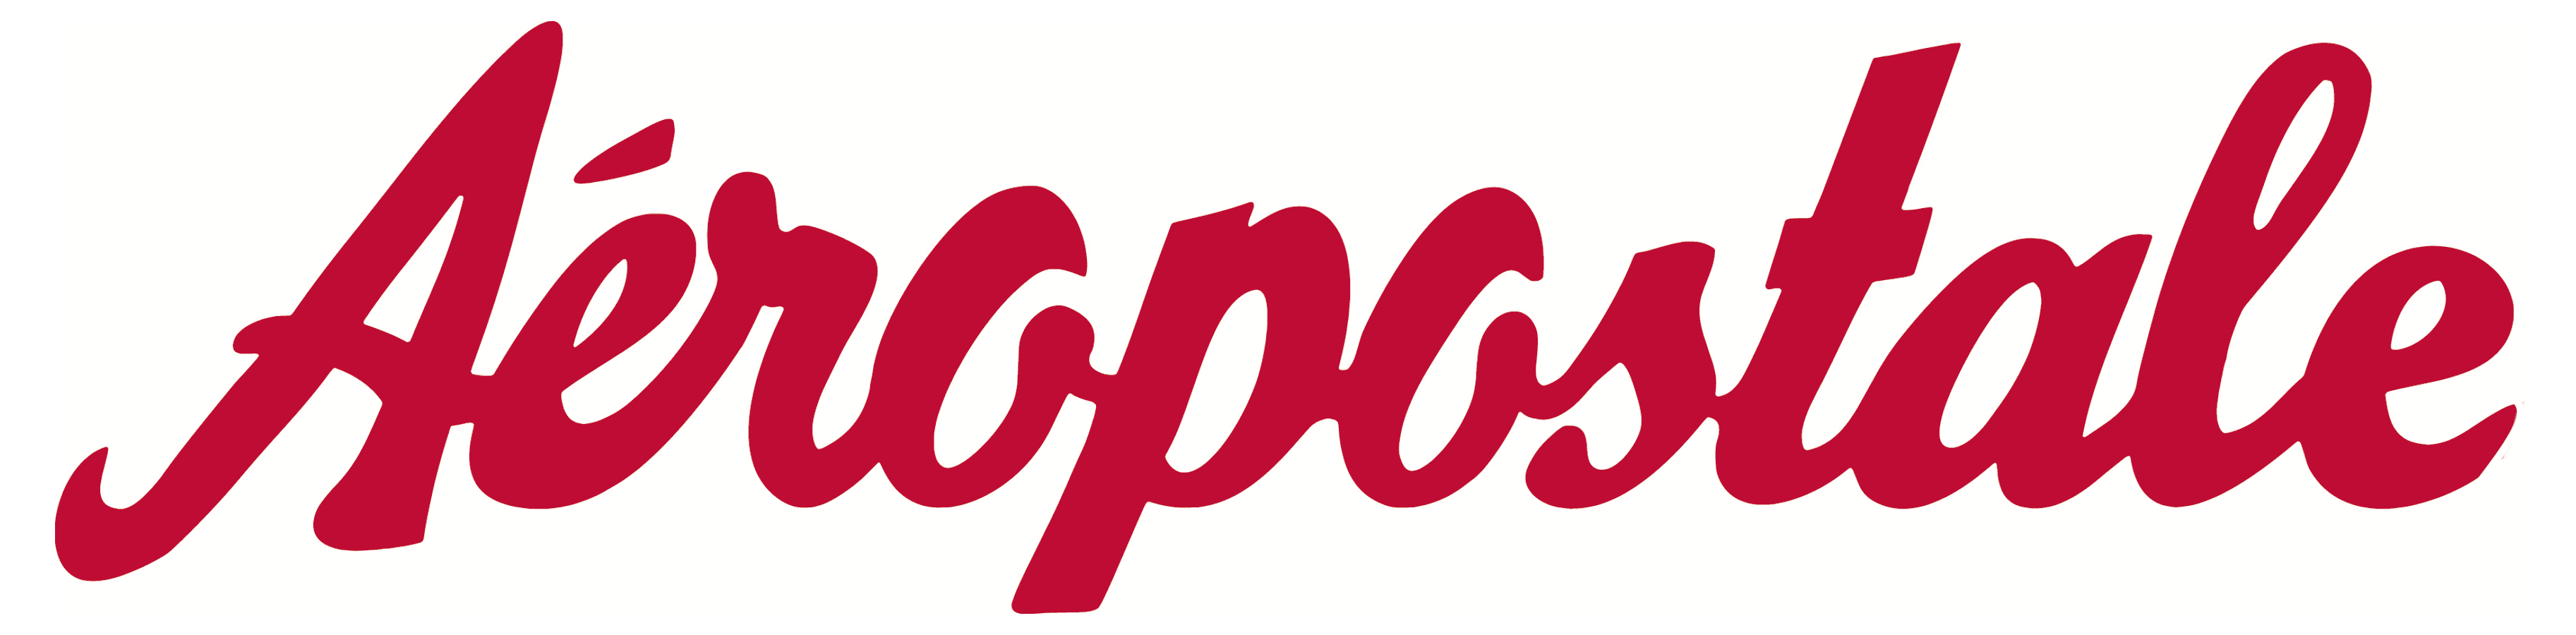 Aeropostale Logo - Aeropostale – Logos Download